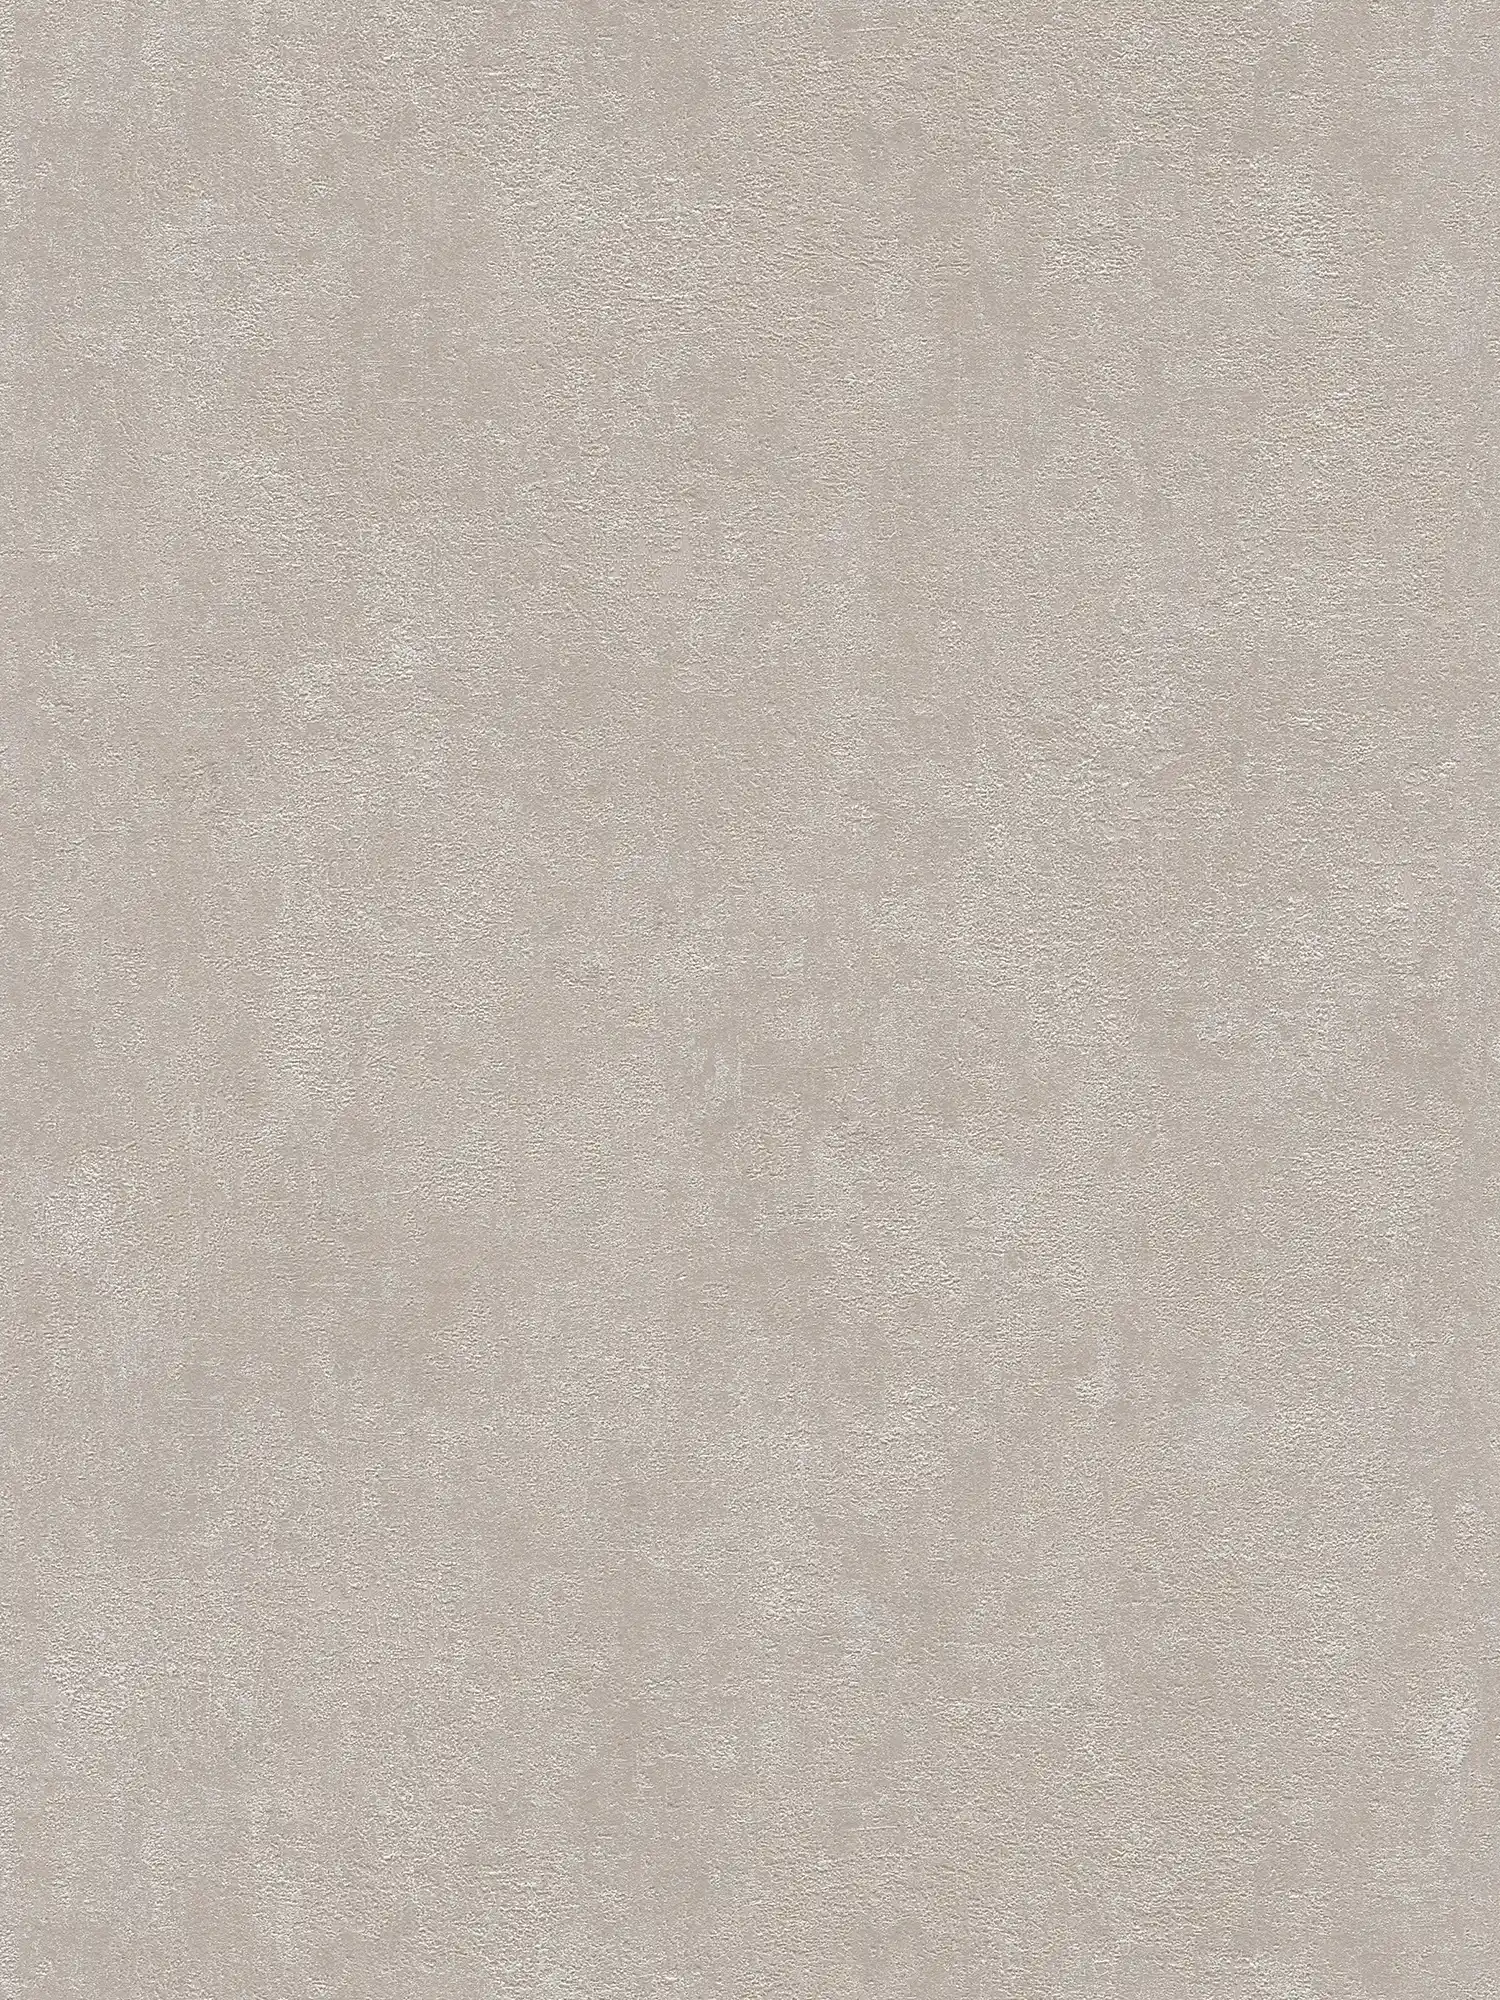             Carta da parati in tessuto non tessuto grigio seta opaco con texture effetto pietra
        